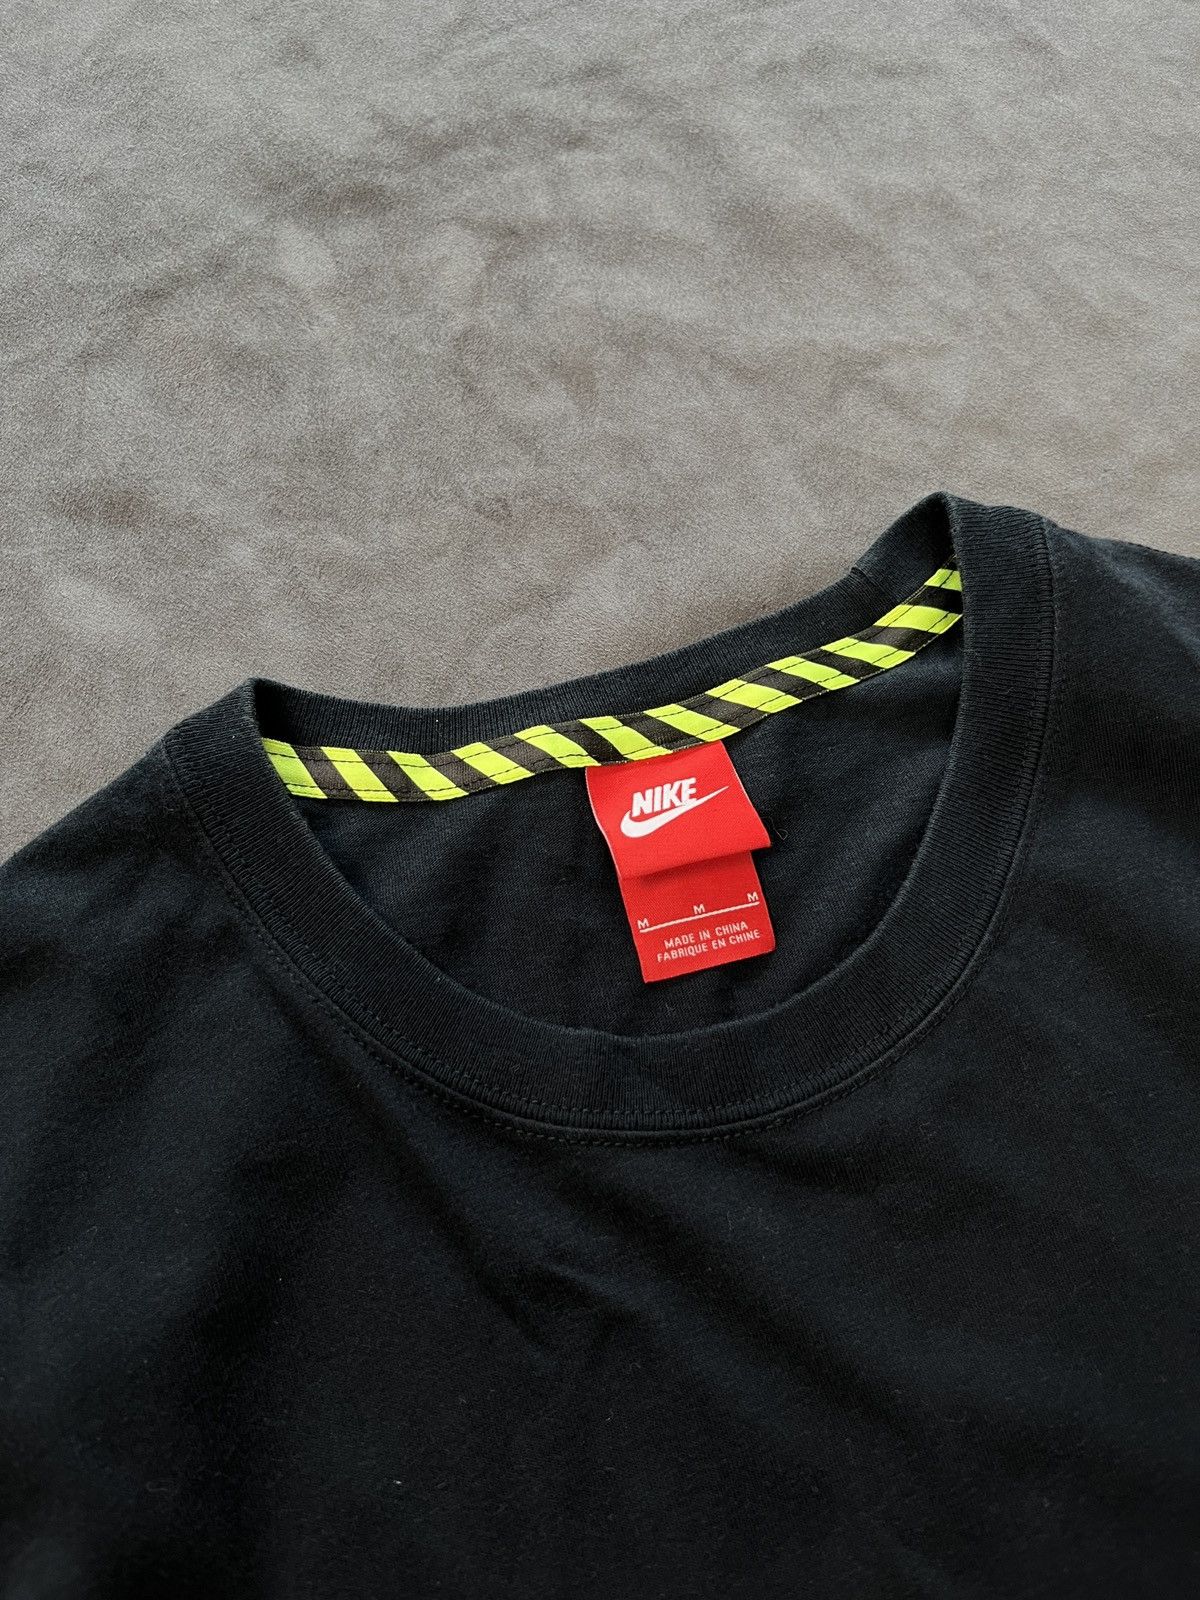 Nike Sportswear RU Elongated Track Tee Black T-Shirt Medium - 7